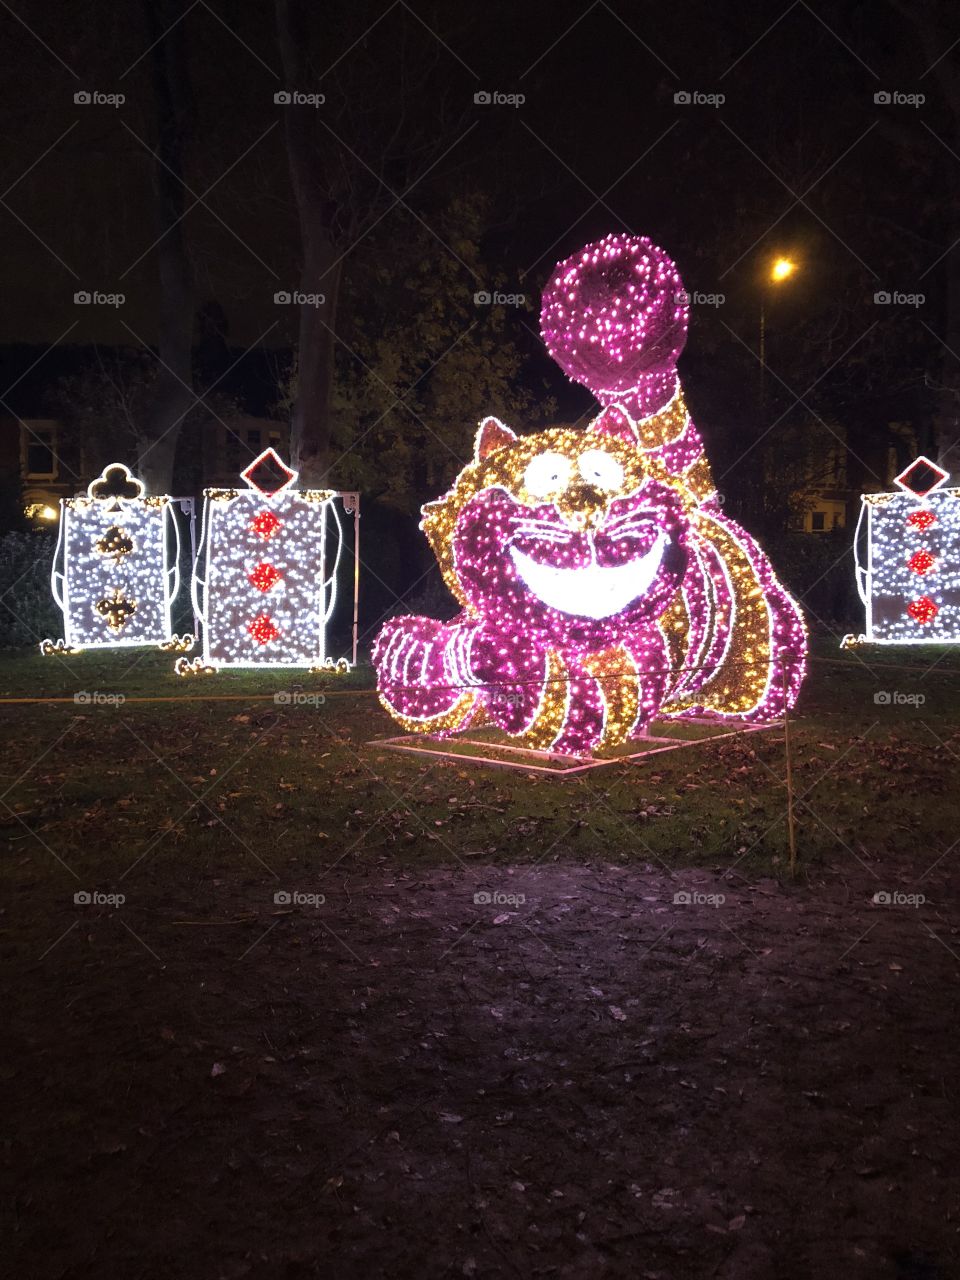 Cheshire Cat at the Illuminations